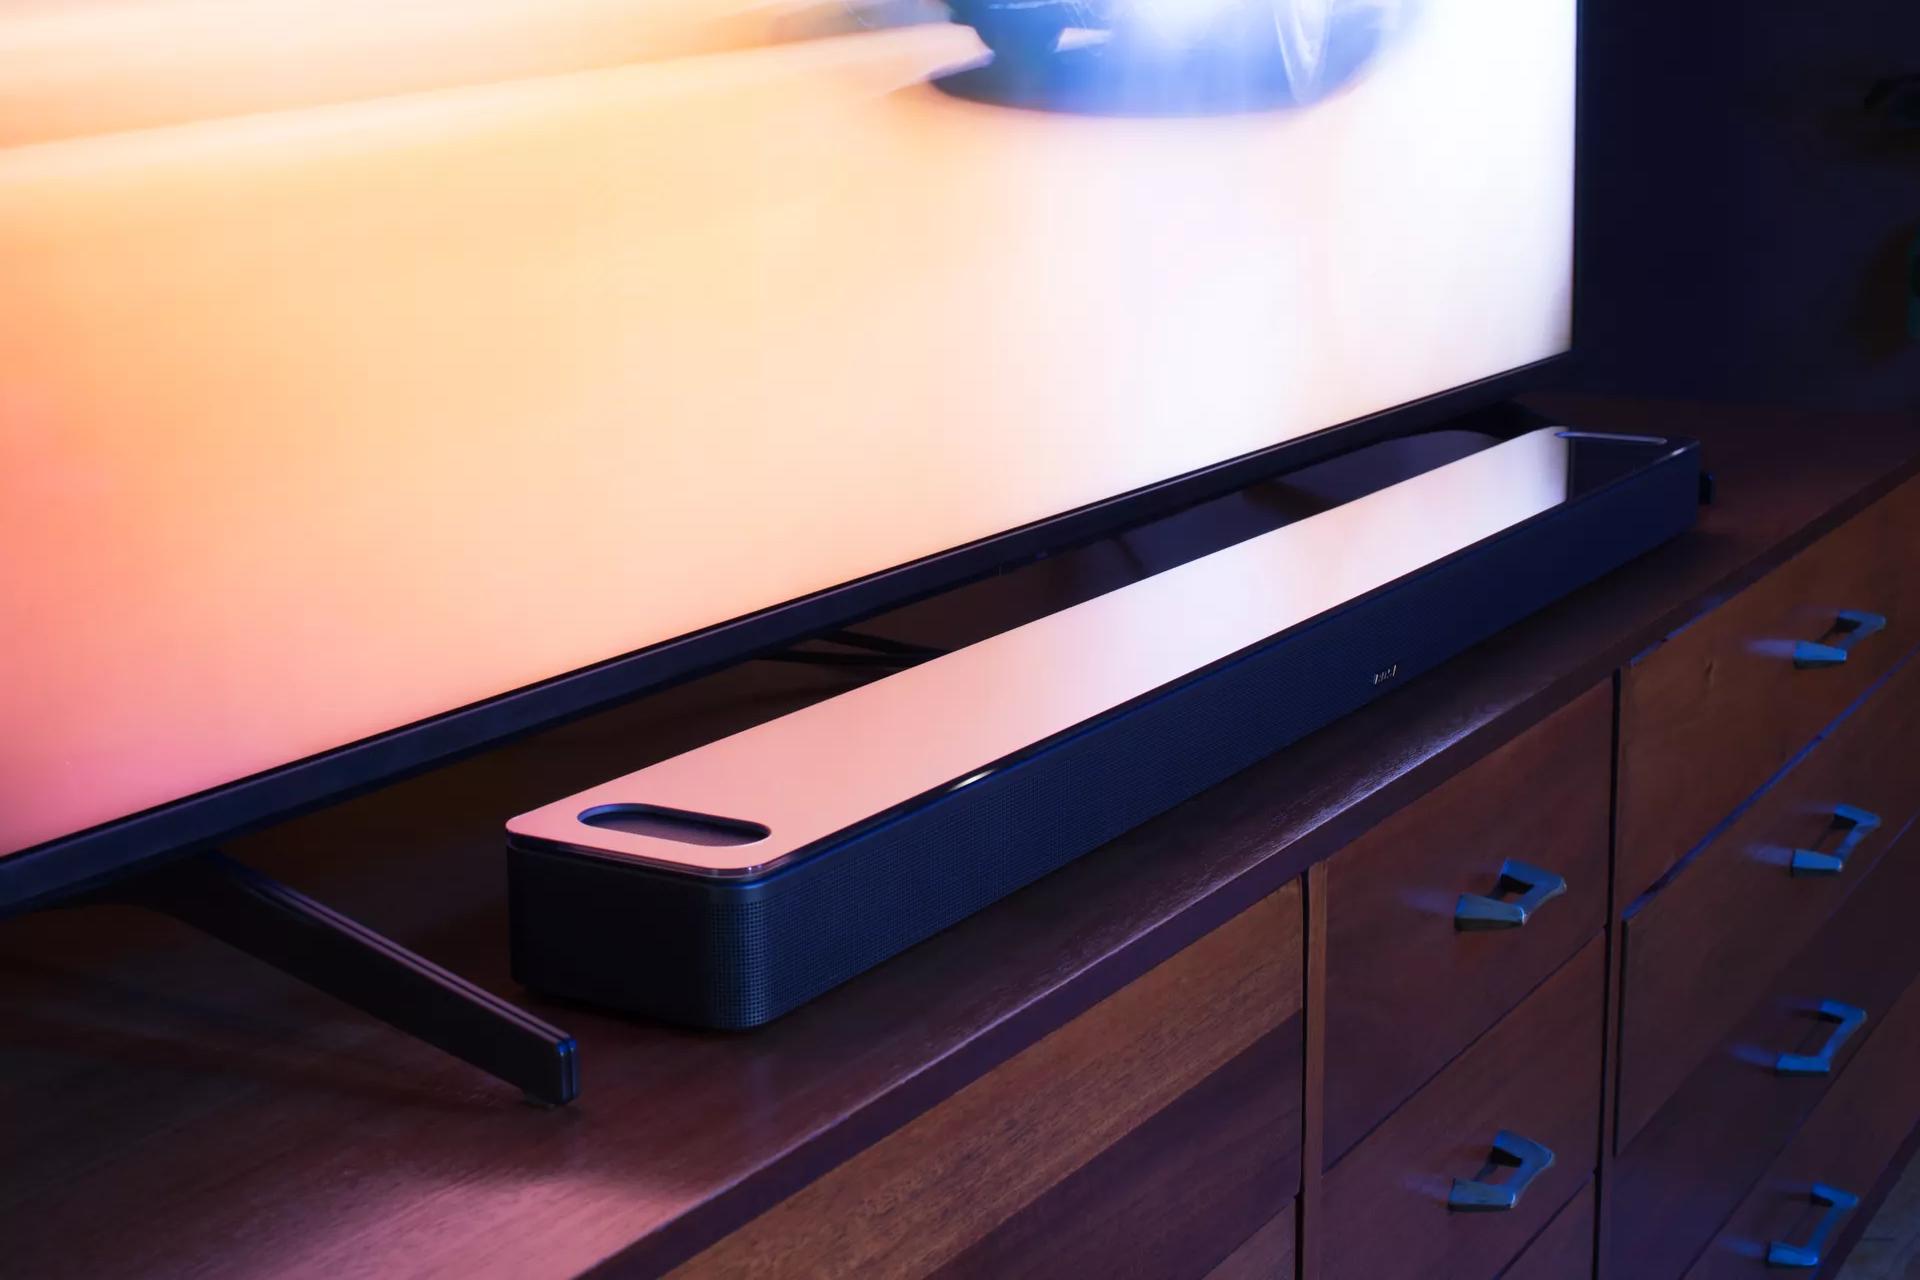 TV and a soundbar on a media console